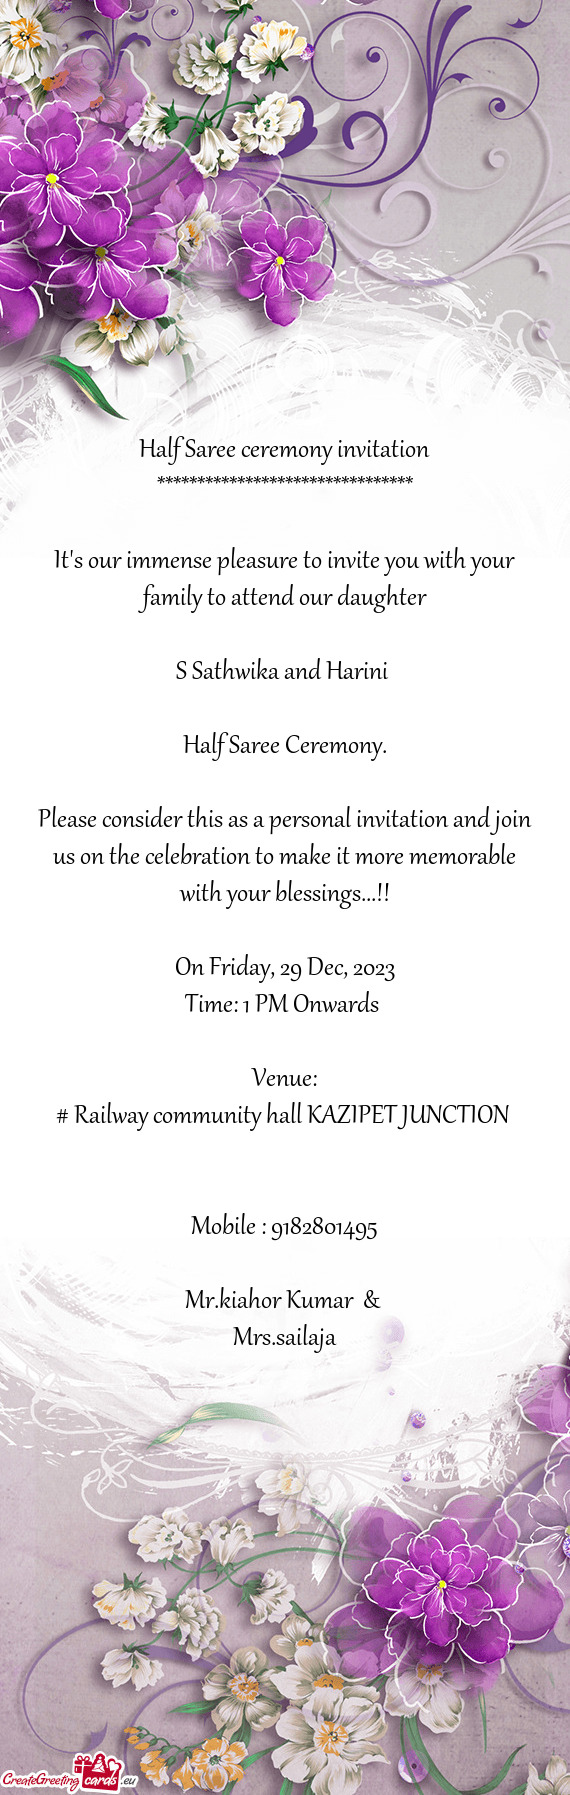 # Railway community hall KAZIPET JUNCTION